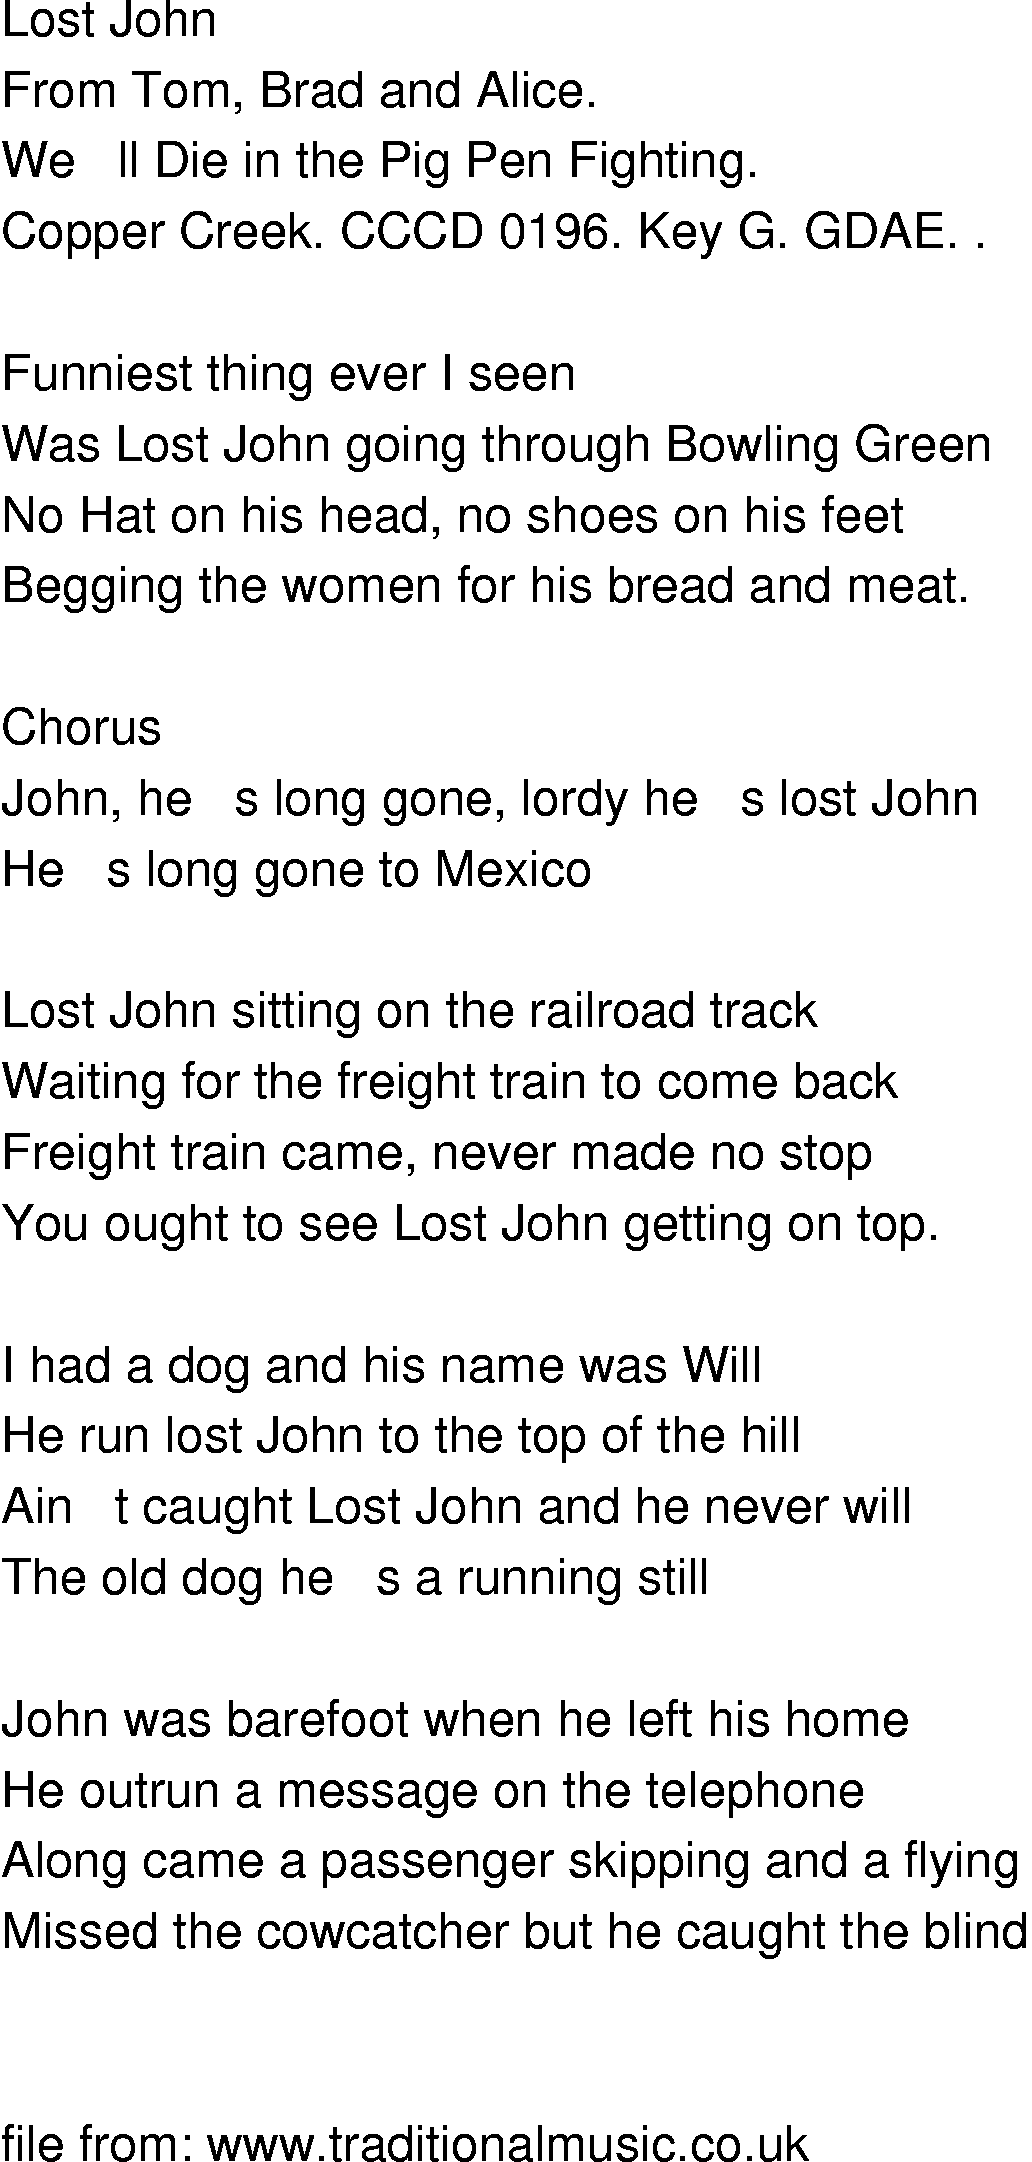 Old-Time (oldtimey) Song Lyrics - lost john